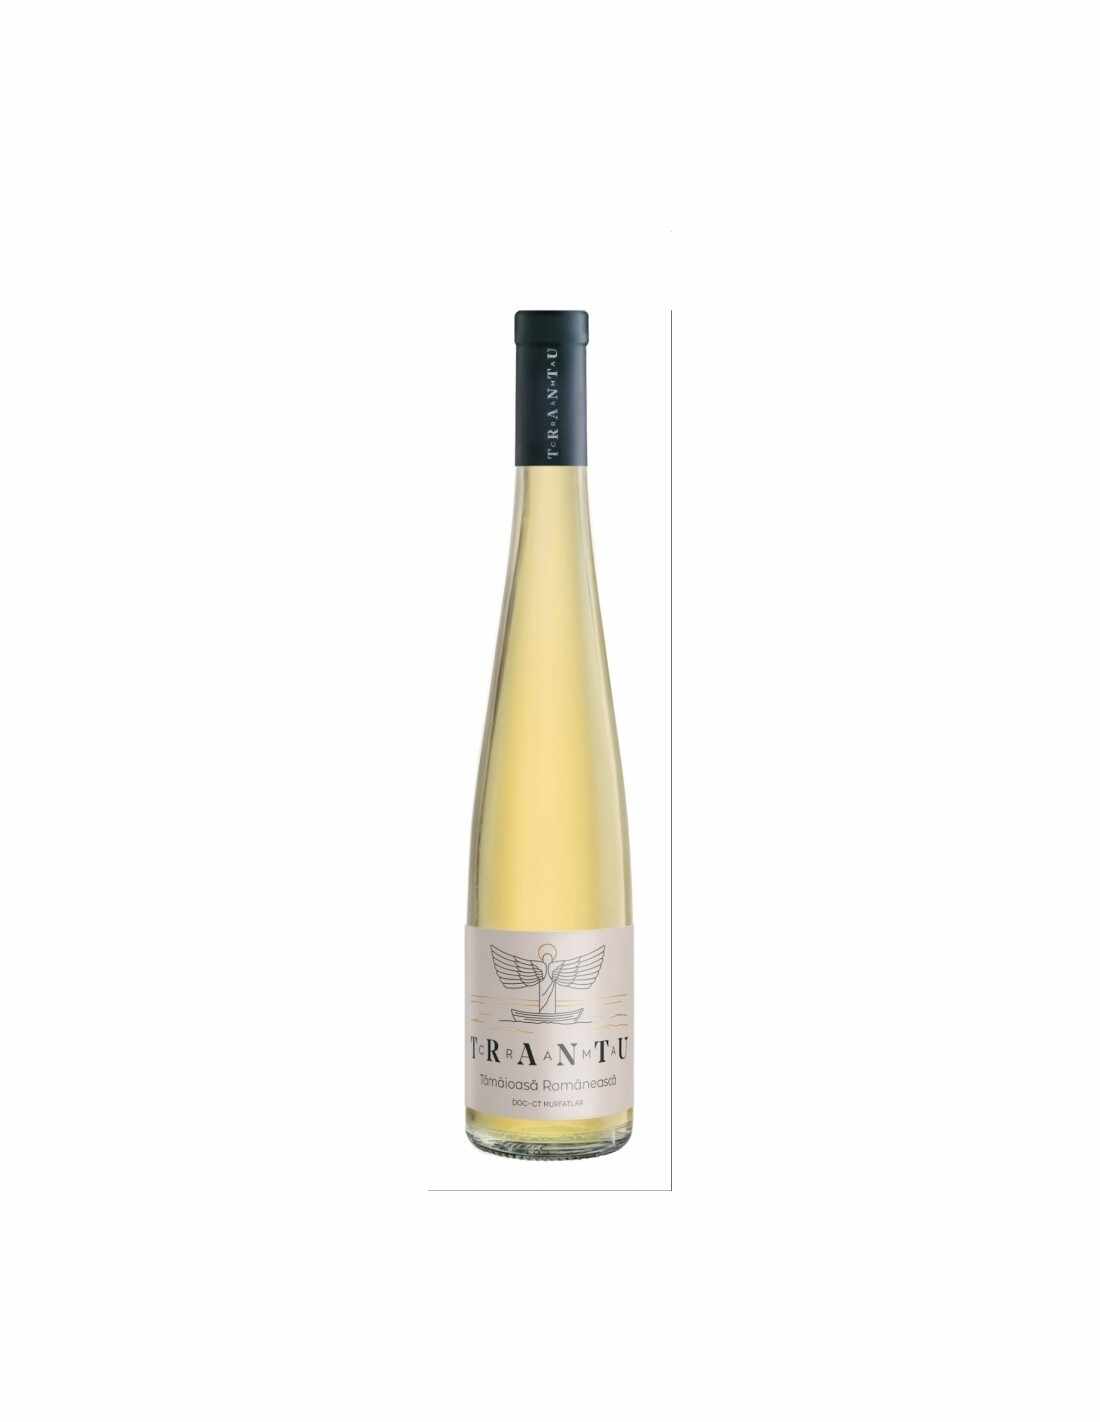 Vin alb dulce, Tamaioasa Romaneasca, Crama Trantu Murfatlar, 0.5L, 12.5% alc., Romania